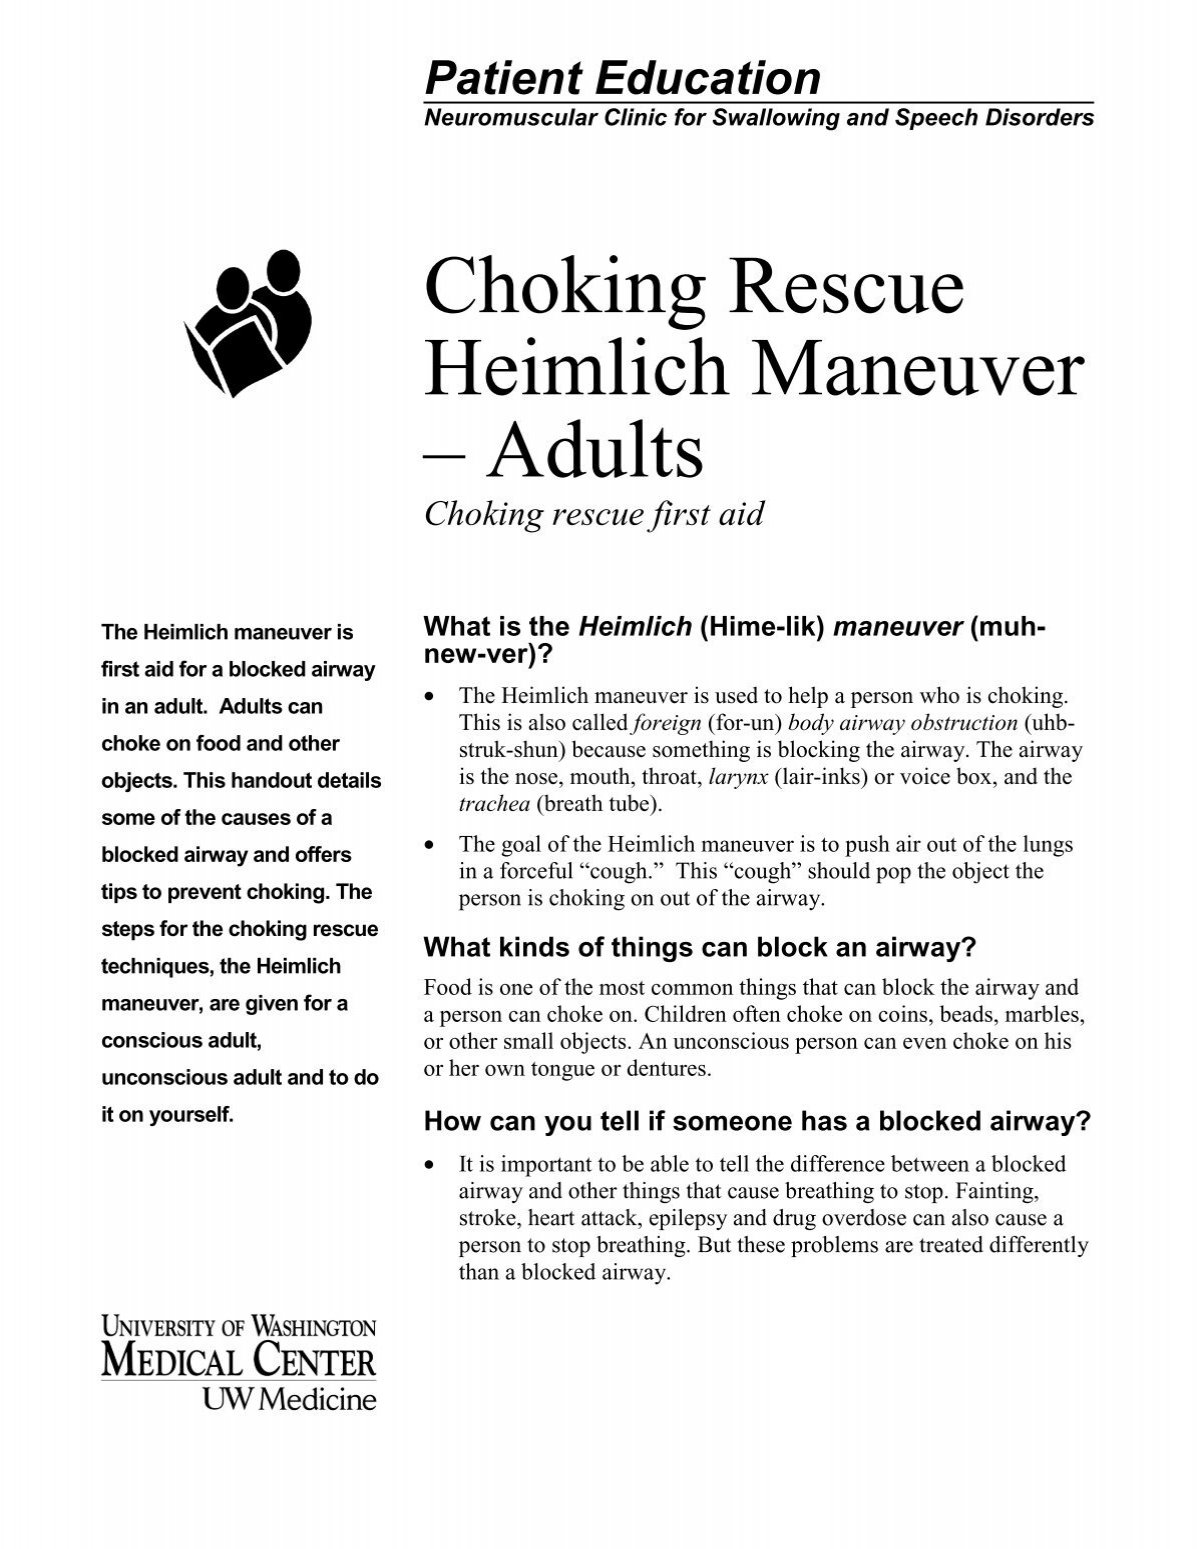 choking-rescue-heimlich-maneuver-adults8-01-uwmc-health